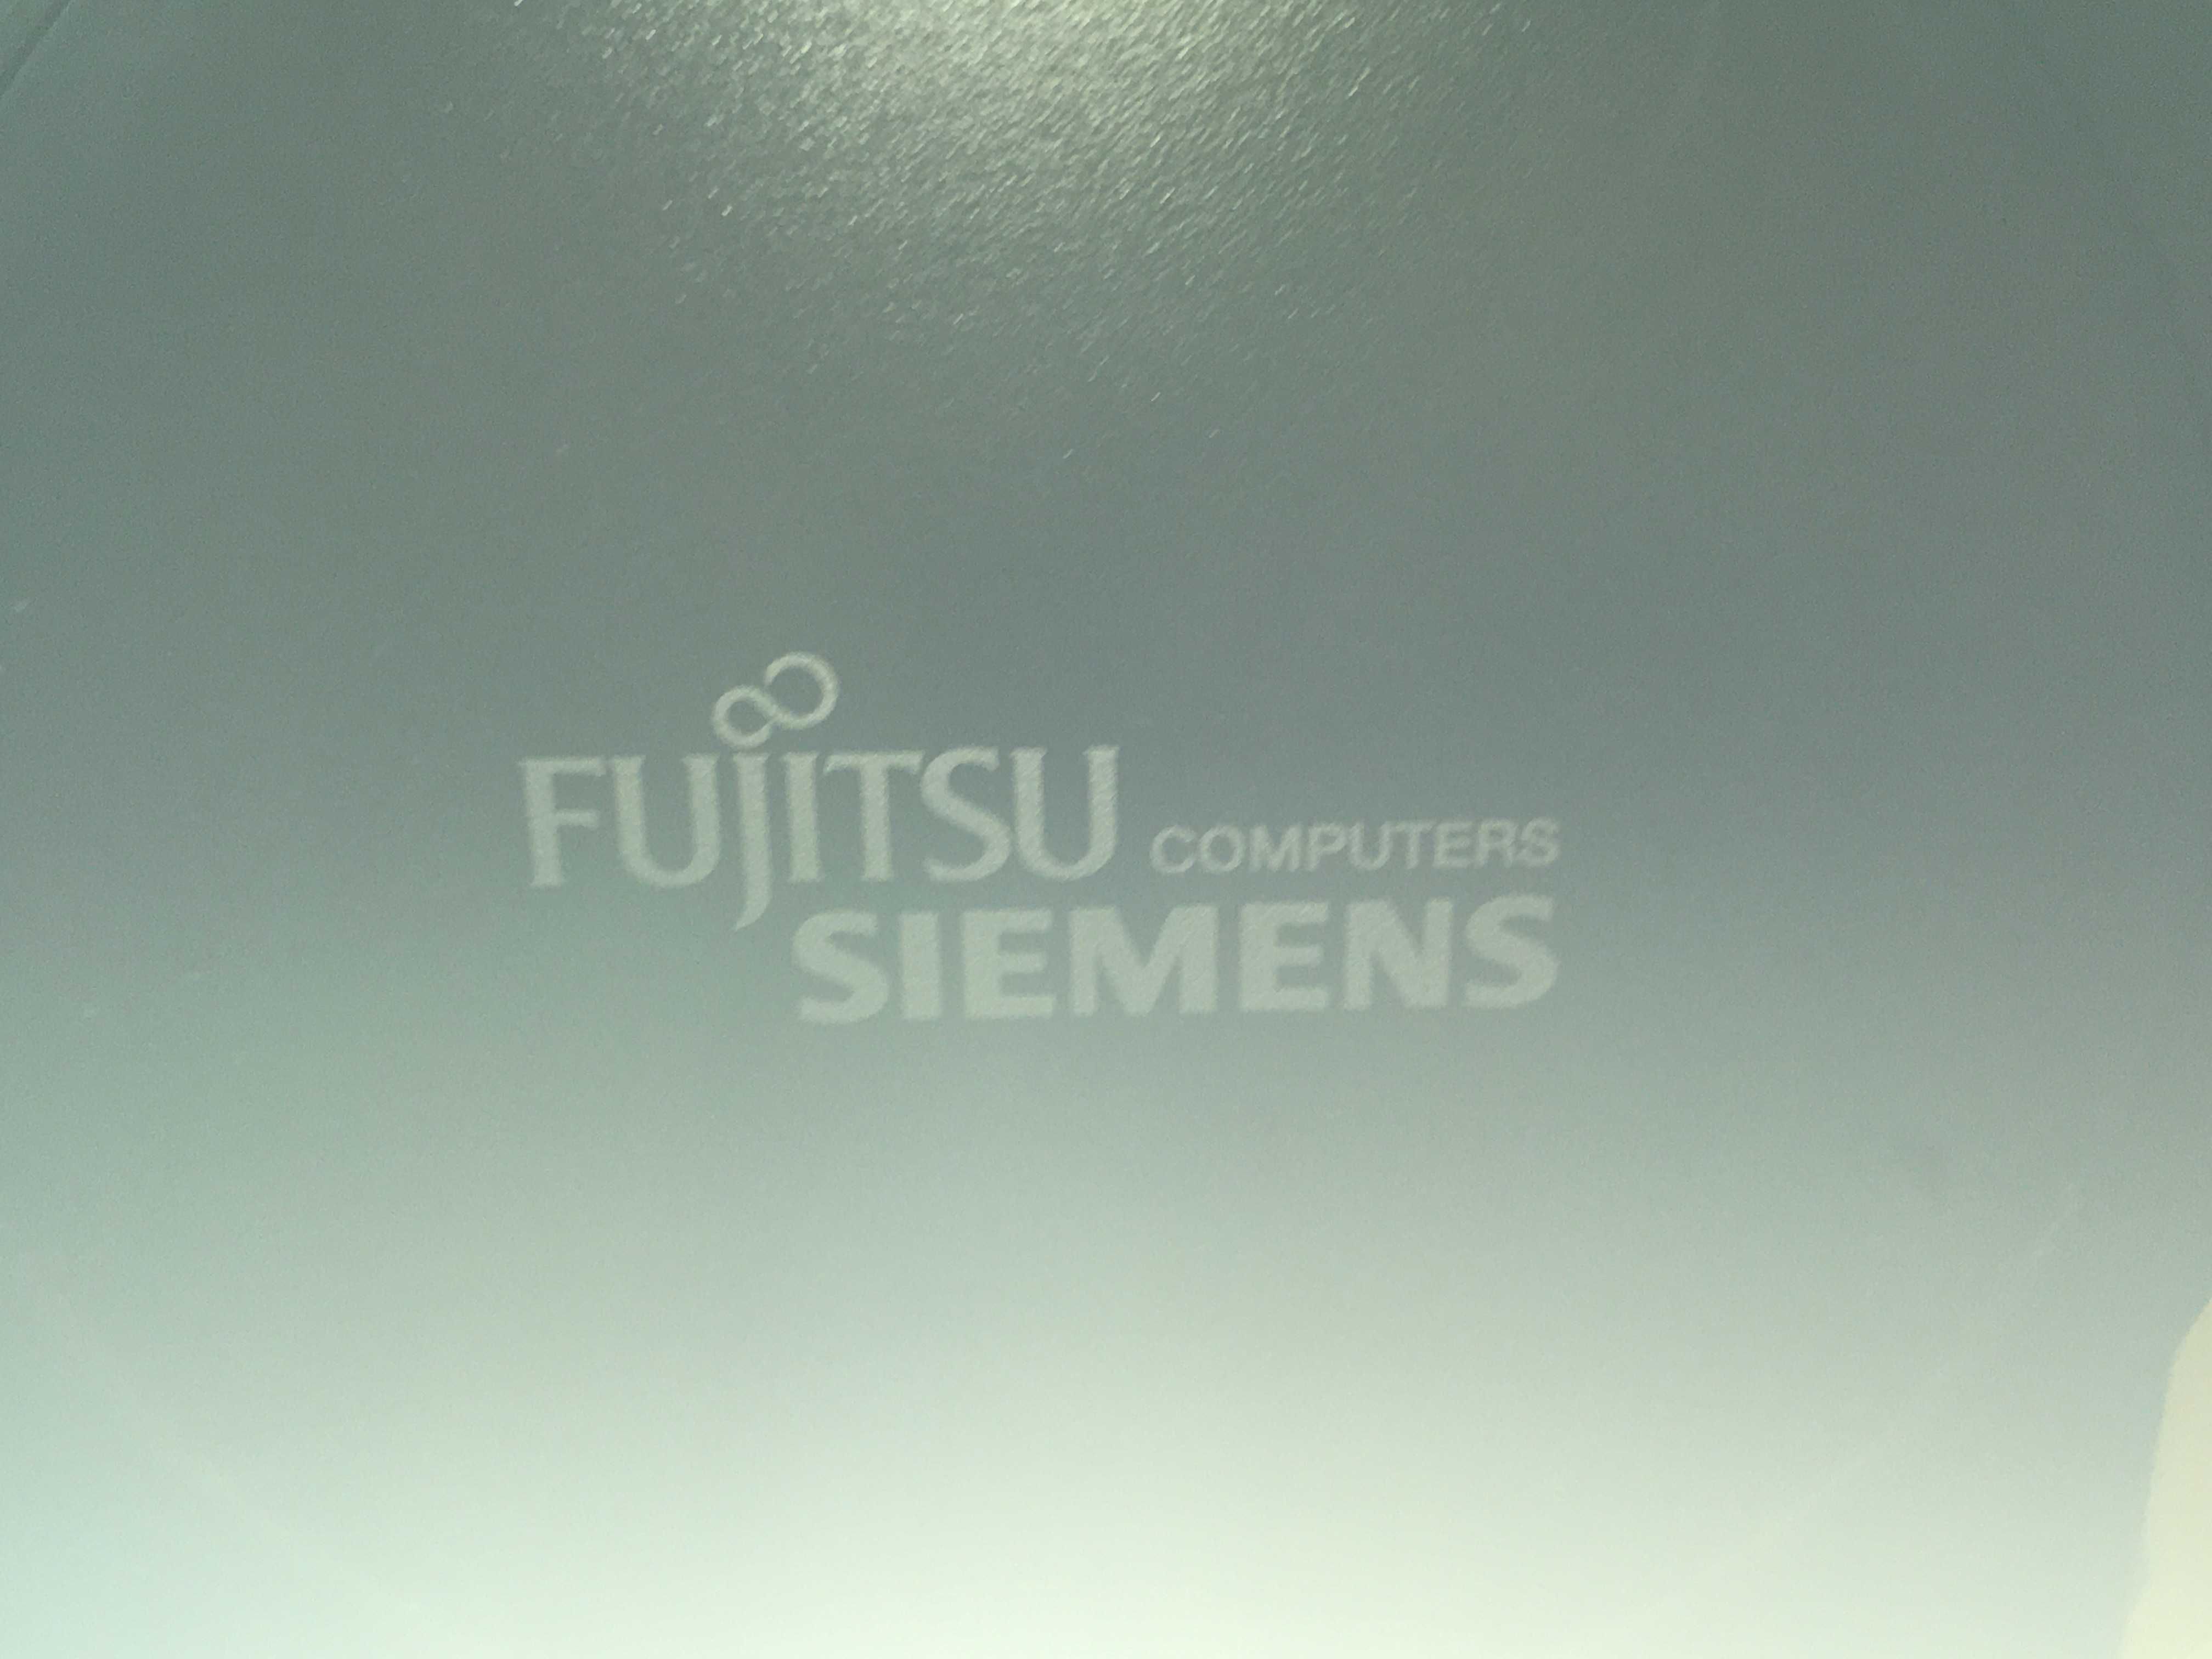 Monitor Siemens Fijitsu